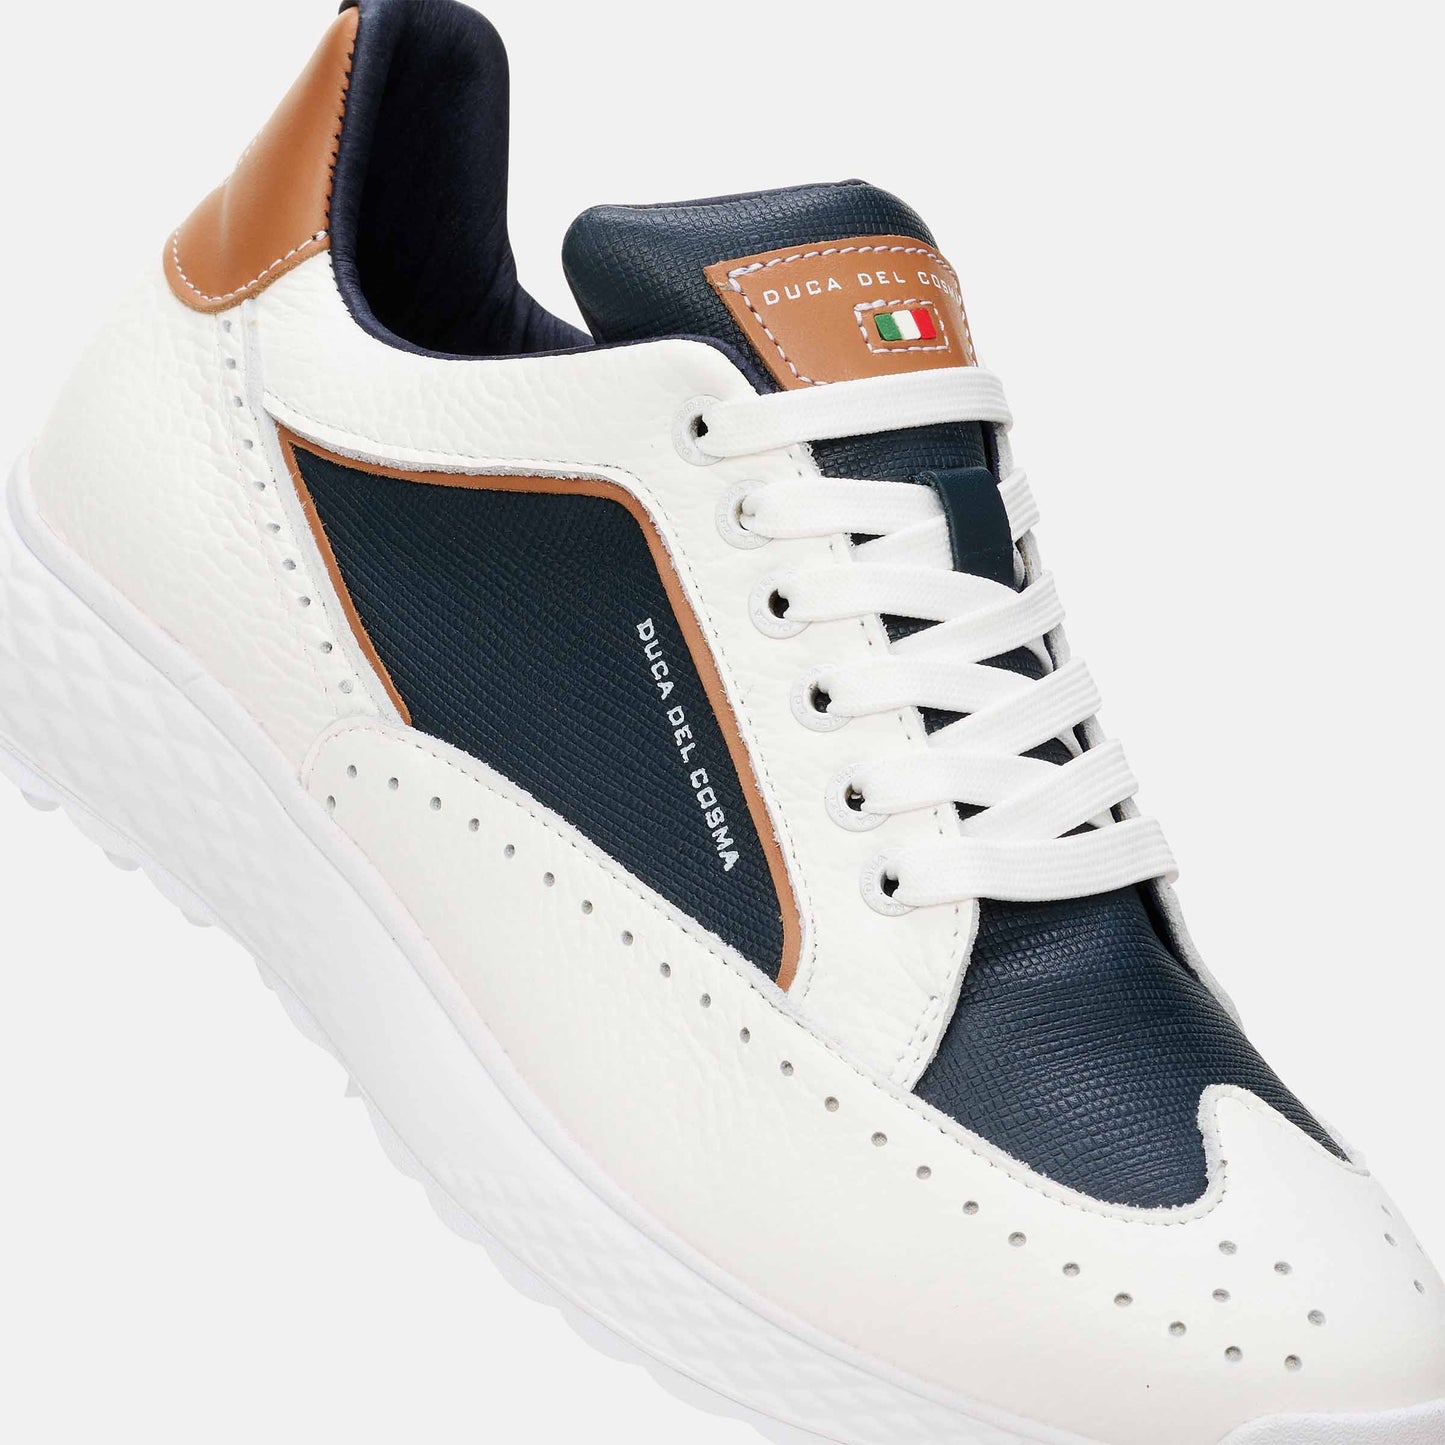 White Golf Shoes, Ultra-Lightweight, Navy Golf Shoes, Spikeless Golf Shoes, Waterproof Golf Shoes, Lightweight Golf Shoes, Duca del Cosma Men's Golf Shoes, Sneaker golf shoes.